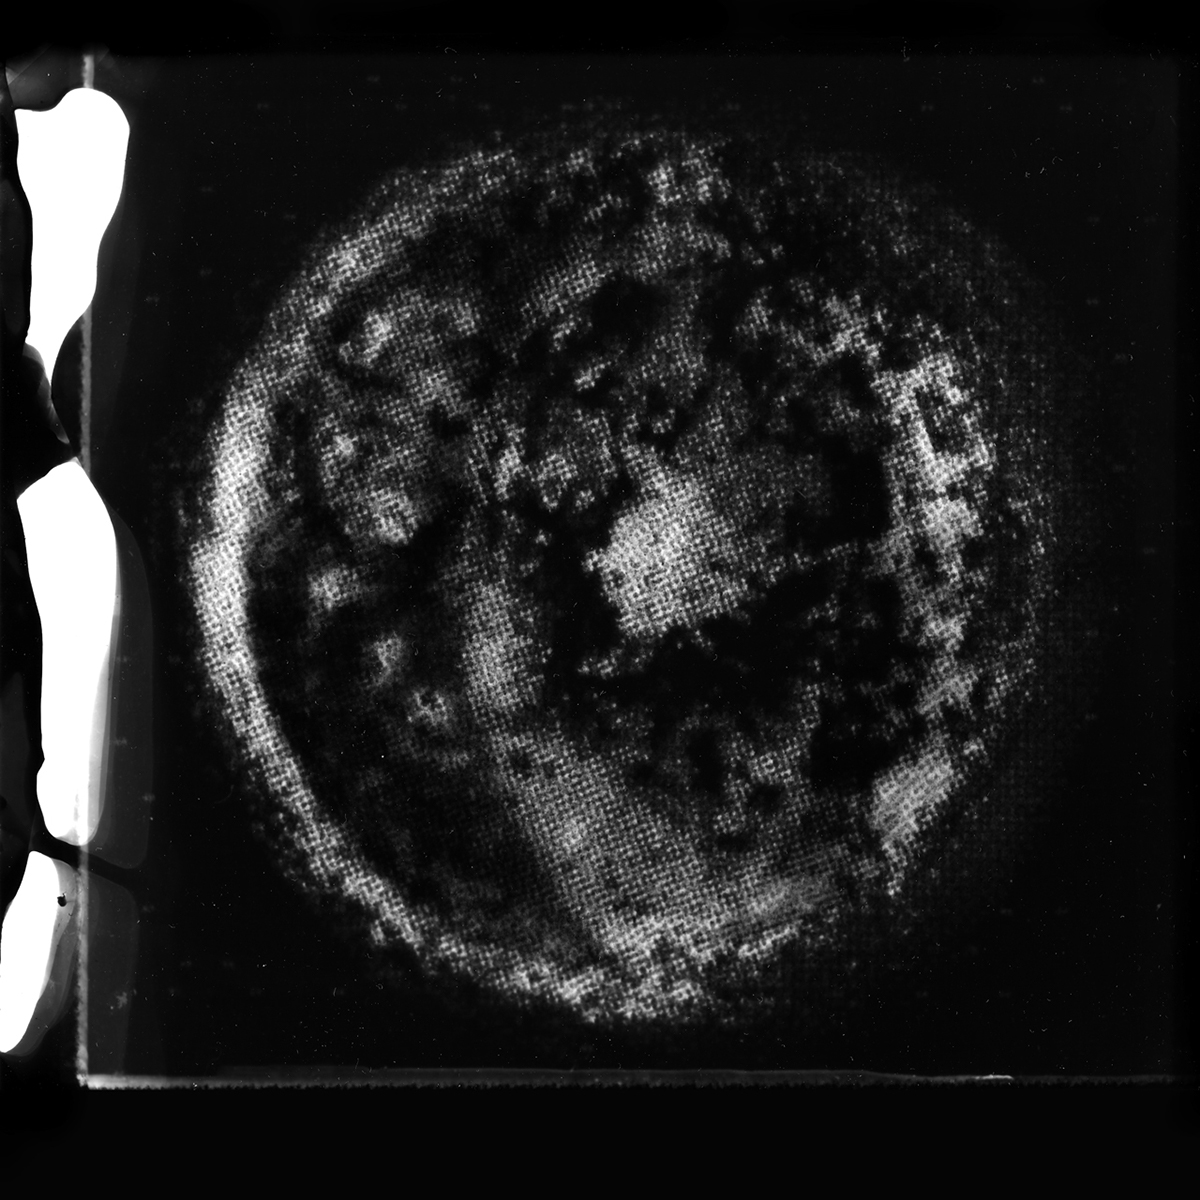 bjork biophilia cosmogony Crystalline Photogram structures photographic layers microscopic BIO ART